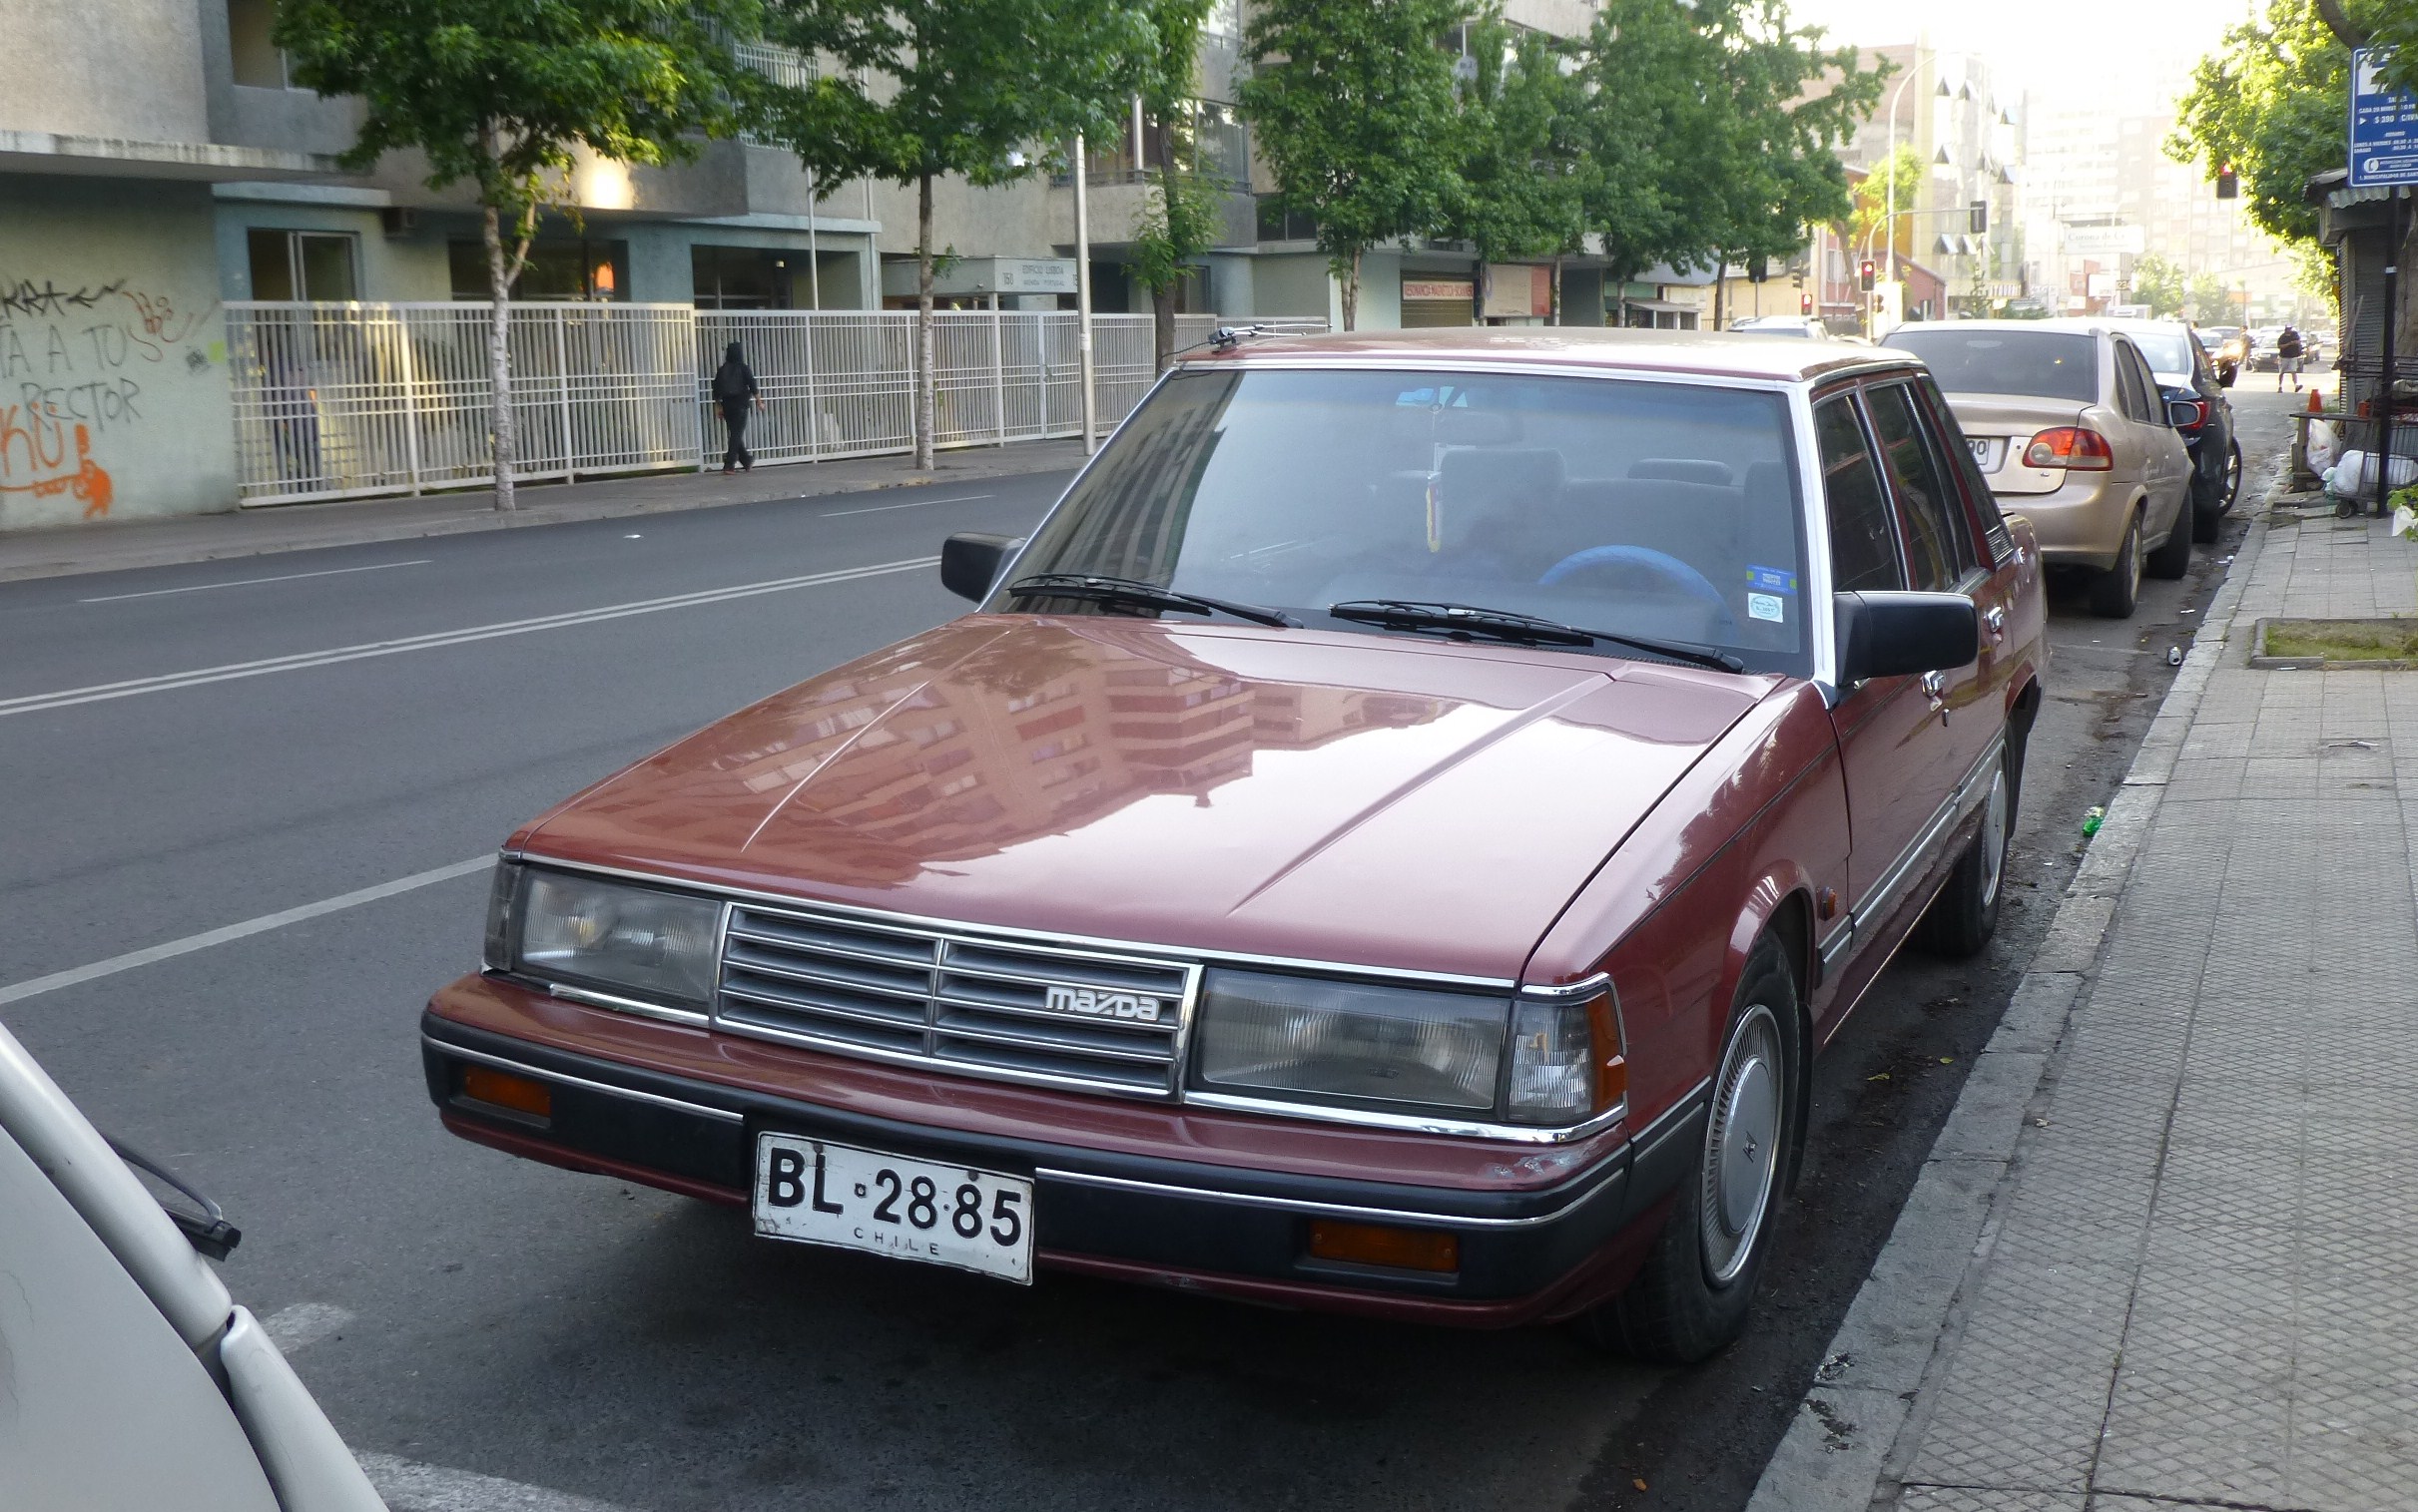 Mazda 929 Limited (Luce) - Santiago, Chile | Flickr - Photo Sharing!